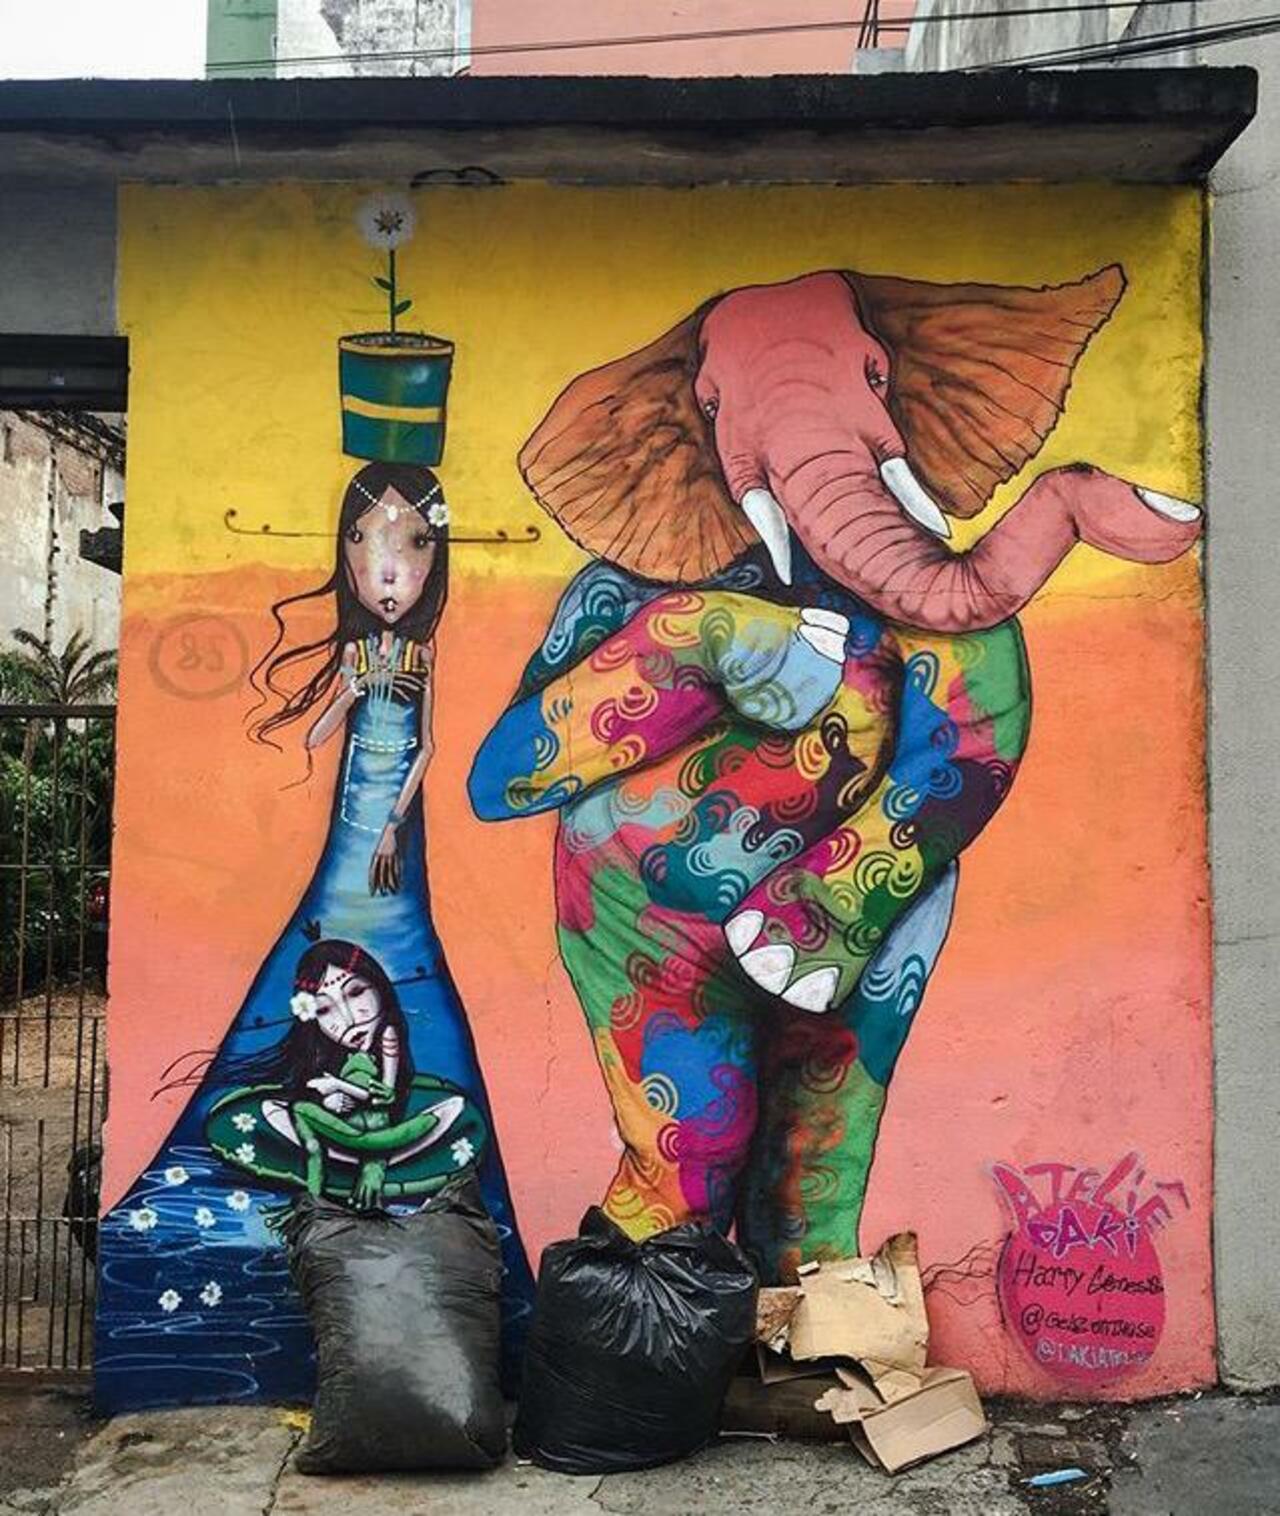 Street Art by Harry Geneis & Gelson in São Paulo #art #mural #graffiti #streetart http://t.co/SlLbhuMZfD … … … … http://twitter.com/GoogleStreetArt/status/648016473831645184/photo/1/large?utm_source=fb&utm_medium=fb&utm_campaign=charlesjackso14&utm_content=648021462331334656